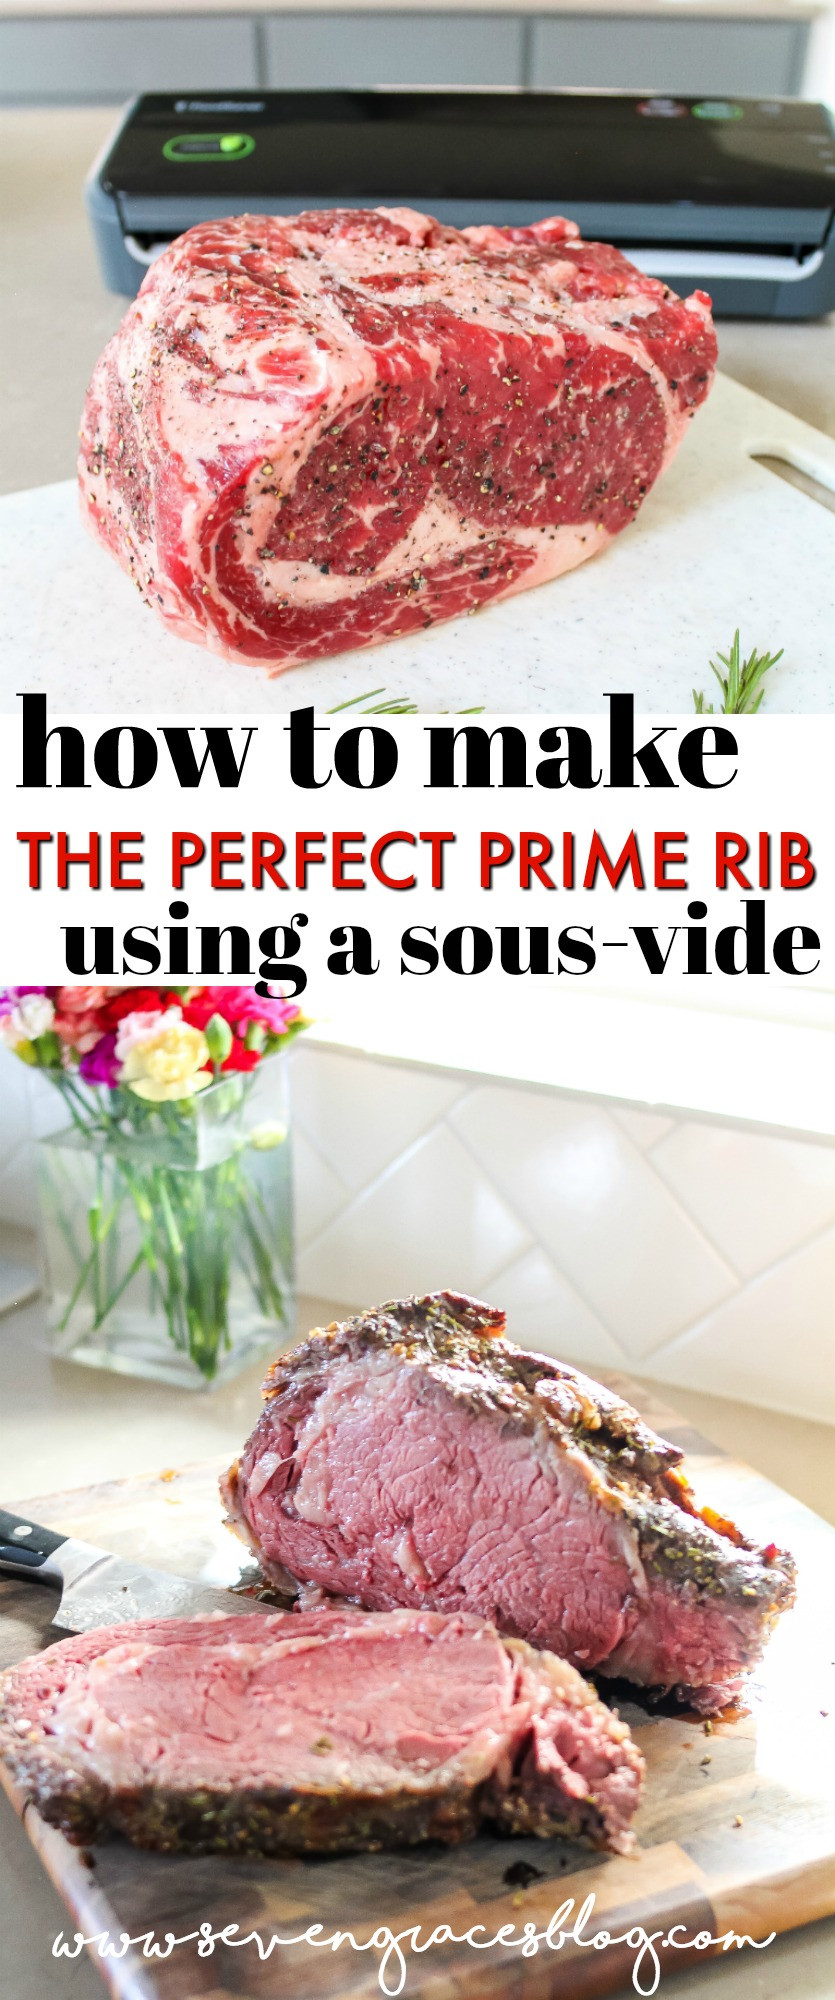 Sous Vide Prime Rib
 How to Make the Perfect Prime Rib Using a Sous Vide